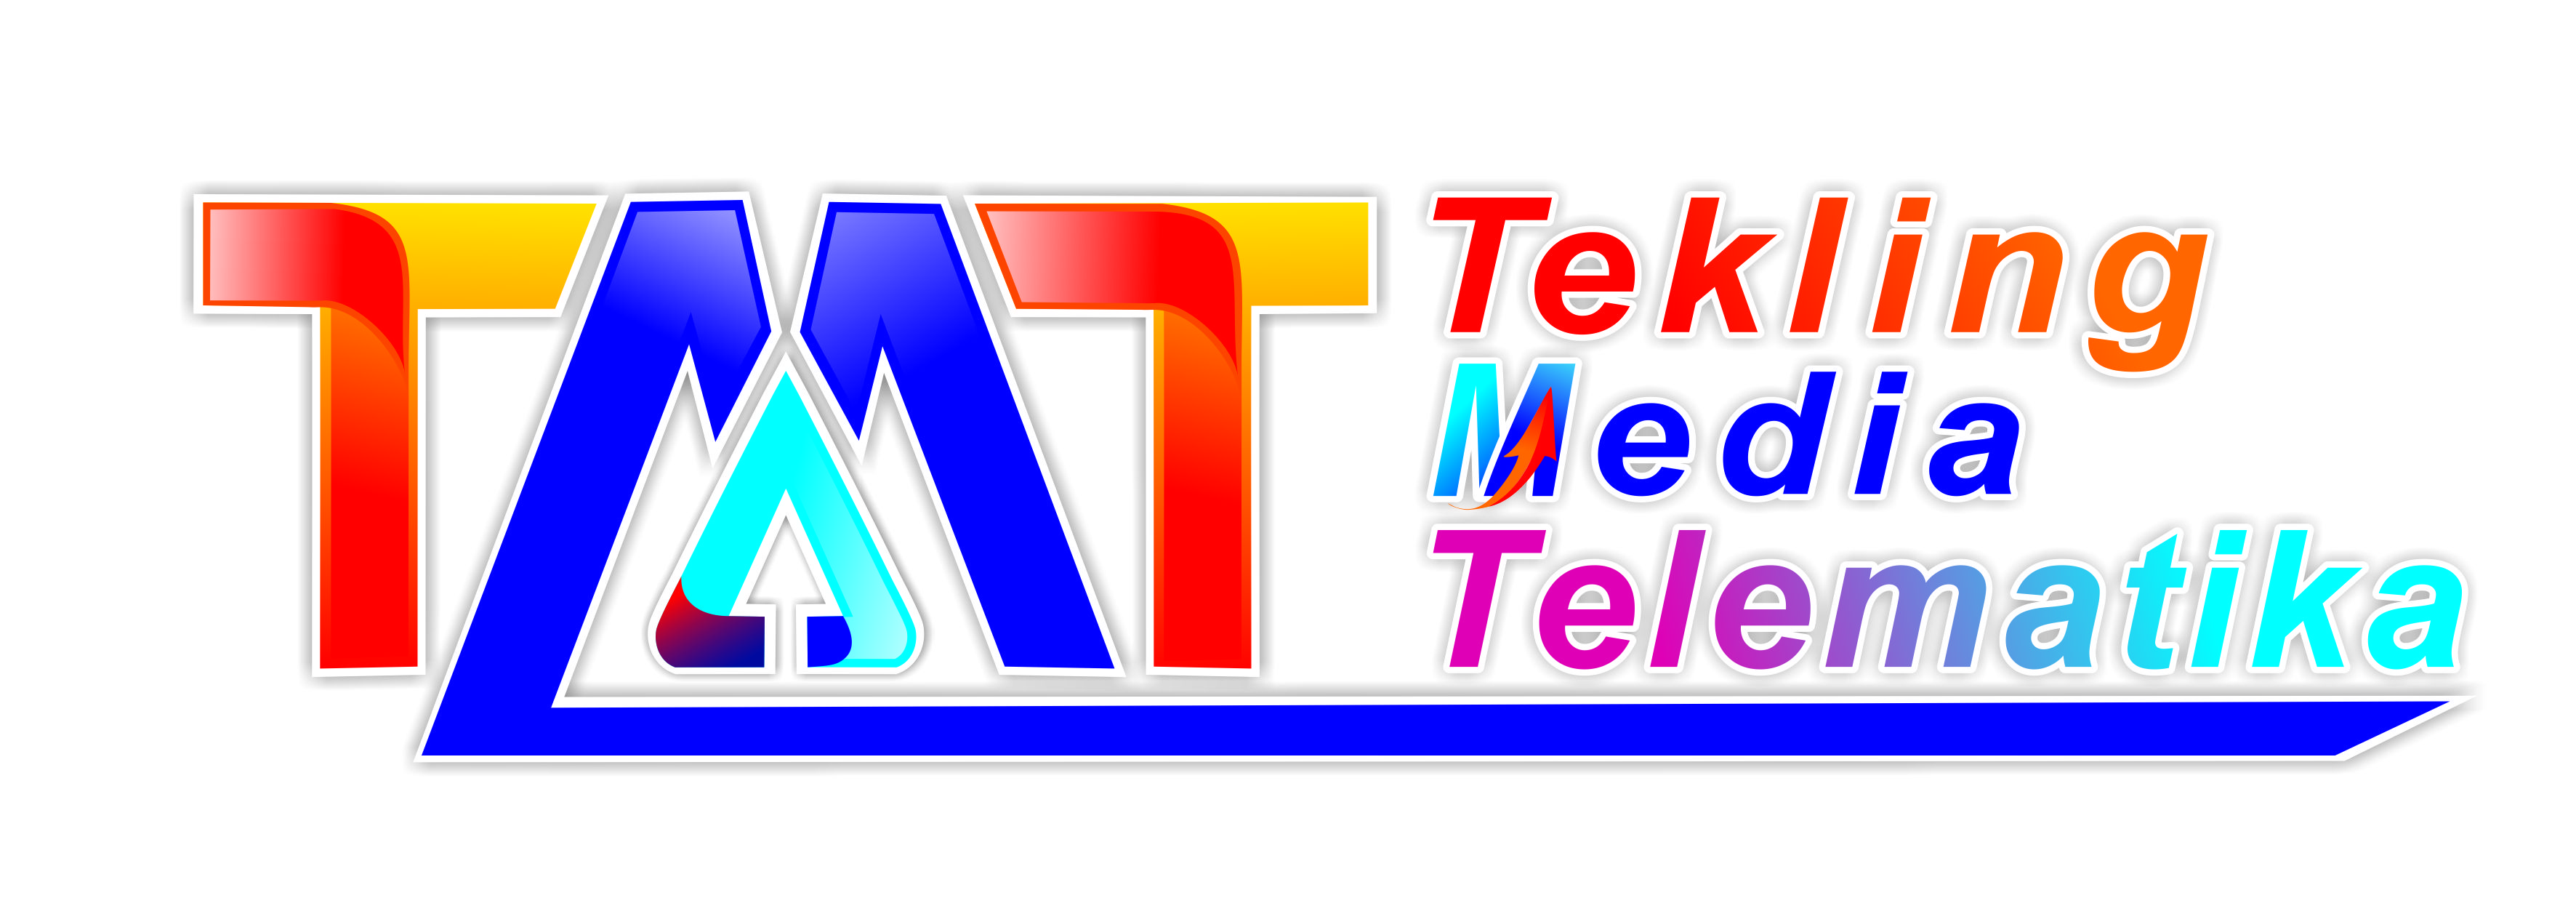 PT. TEKLING MEDIA TELEMATIKA